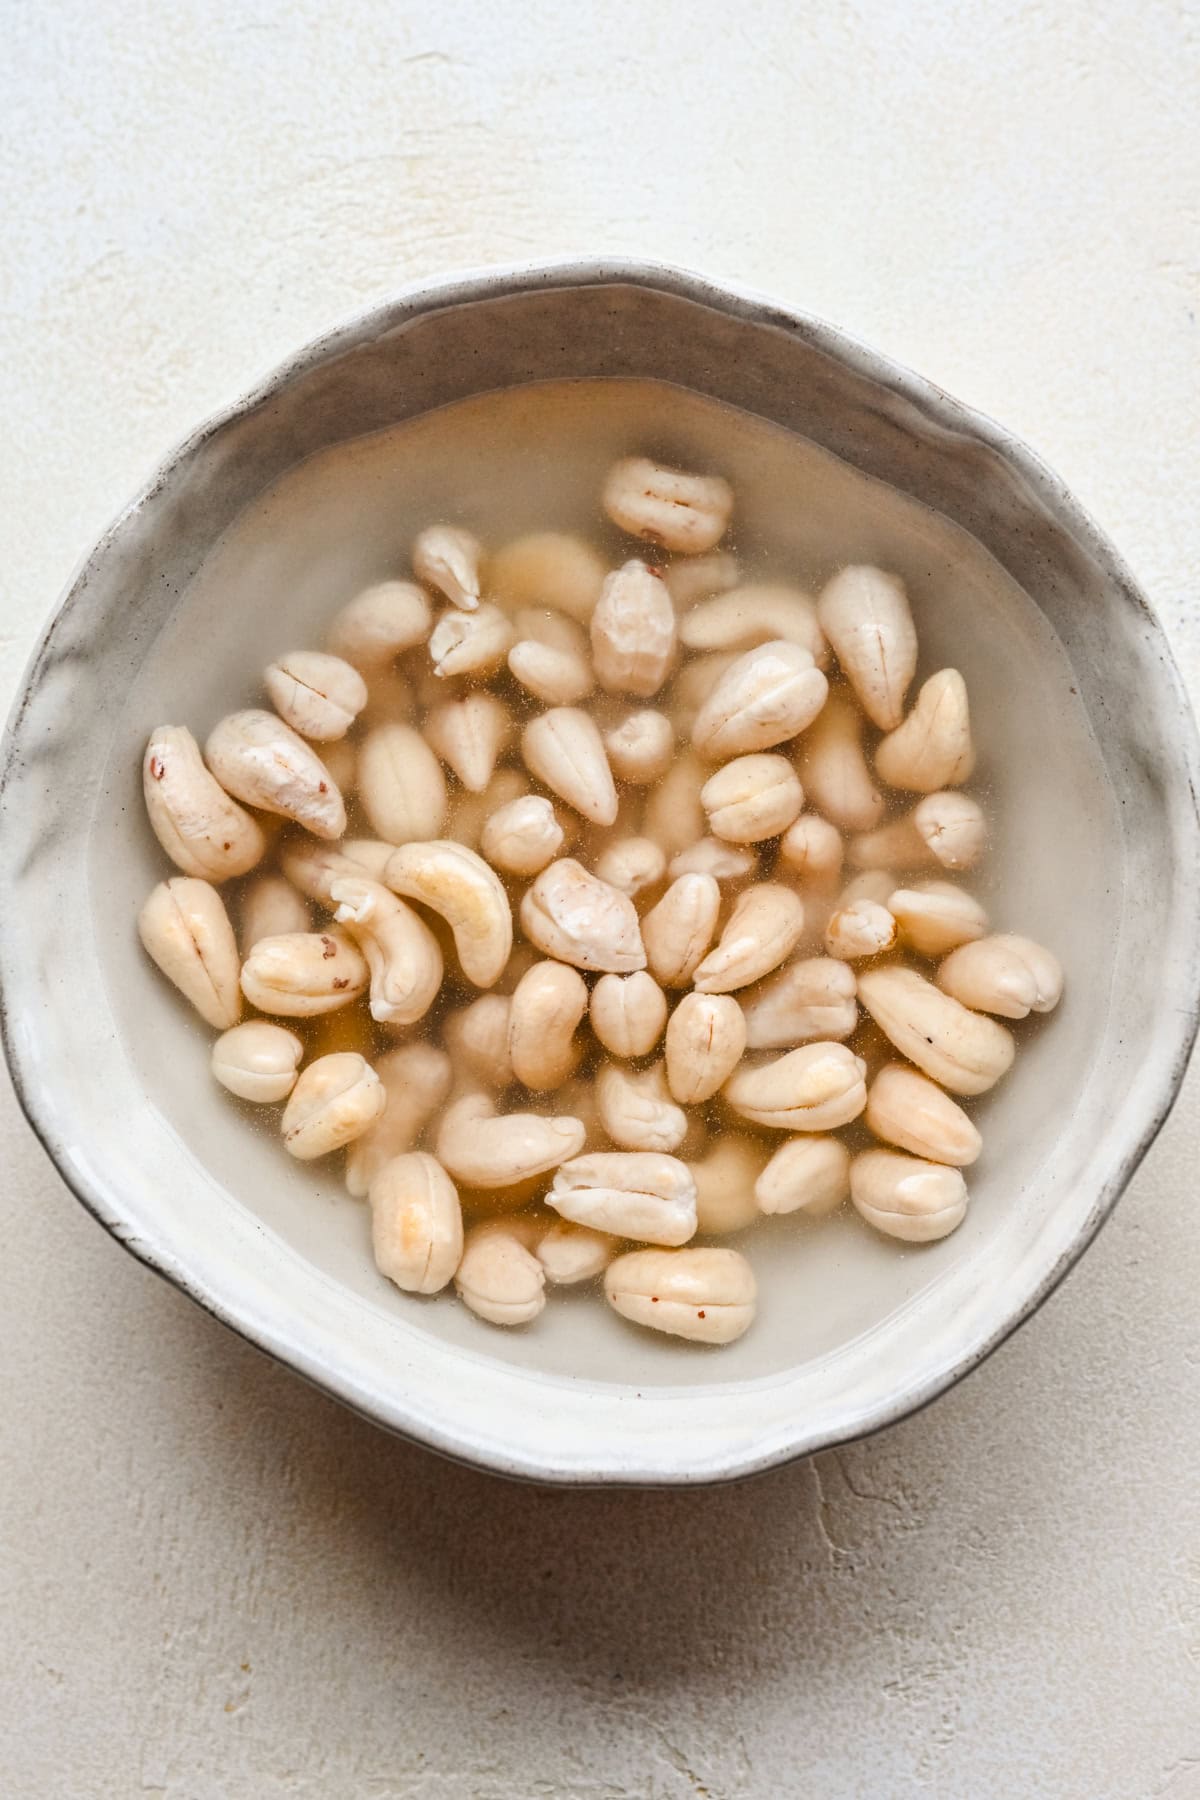 Cashews soaking in a bowl.